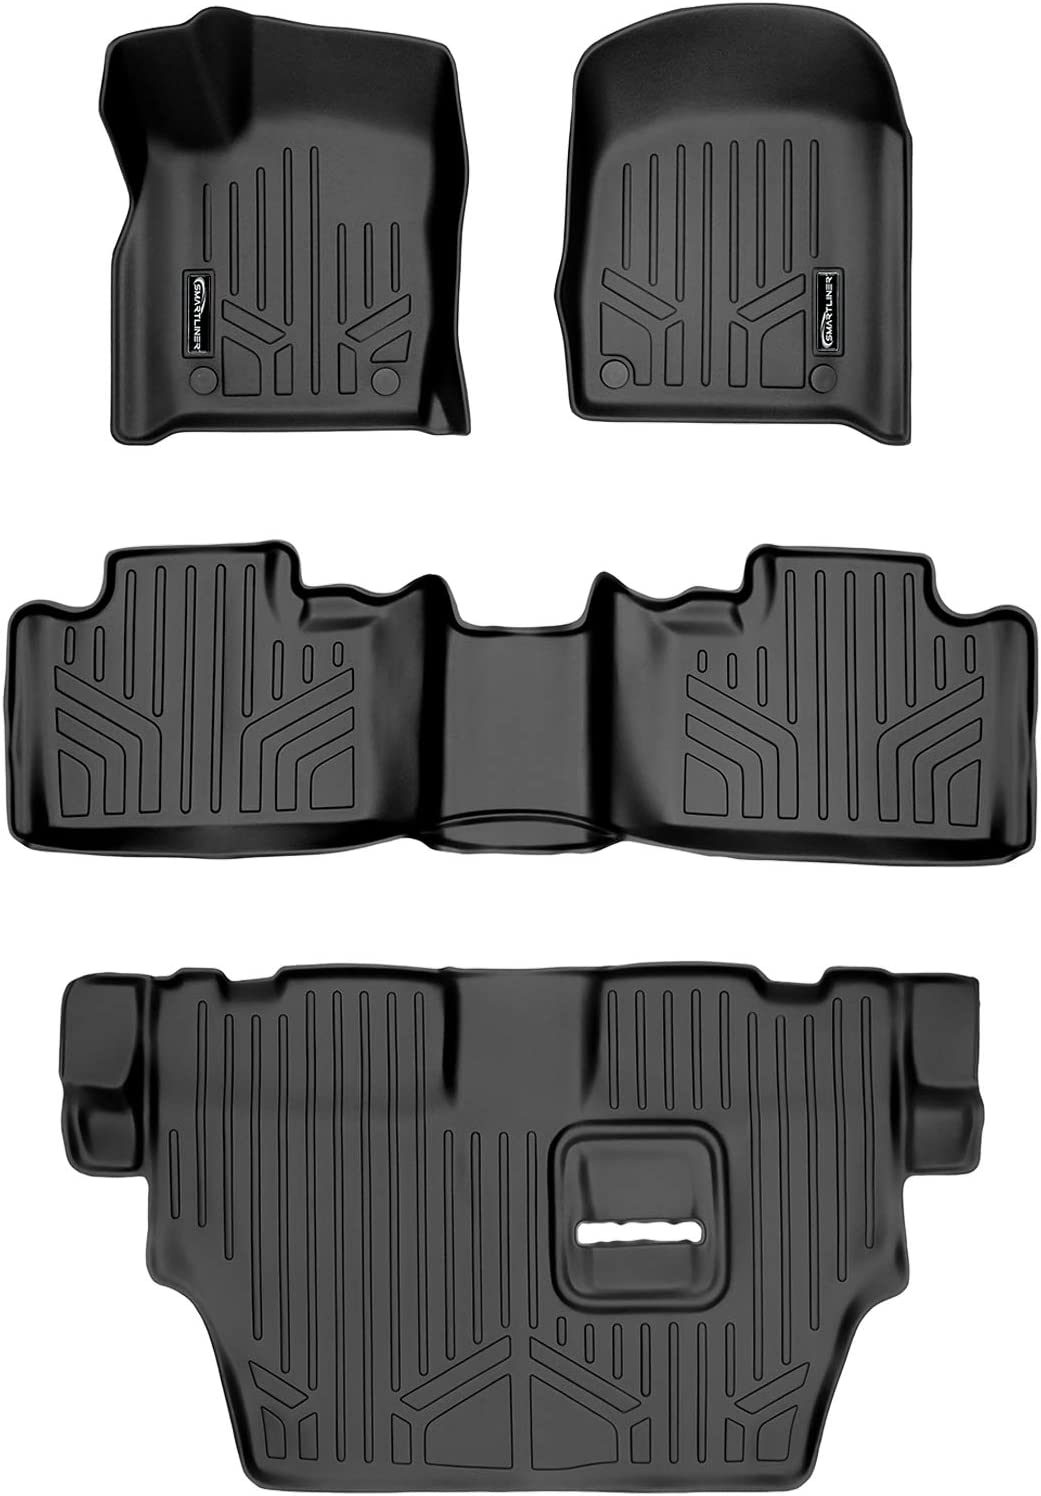 MAXLINER A0315/B0071/C0071 MAXFLOORMAT Floor Mats 3 Row Set Black for 2016-2023 Dodge Durango with 2nd Row Bench Seat